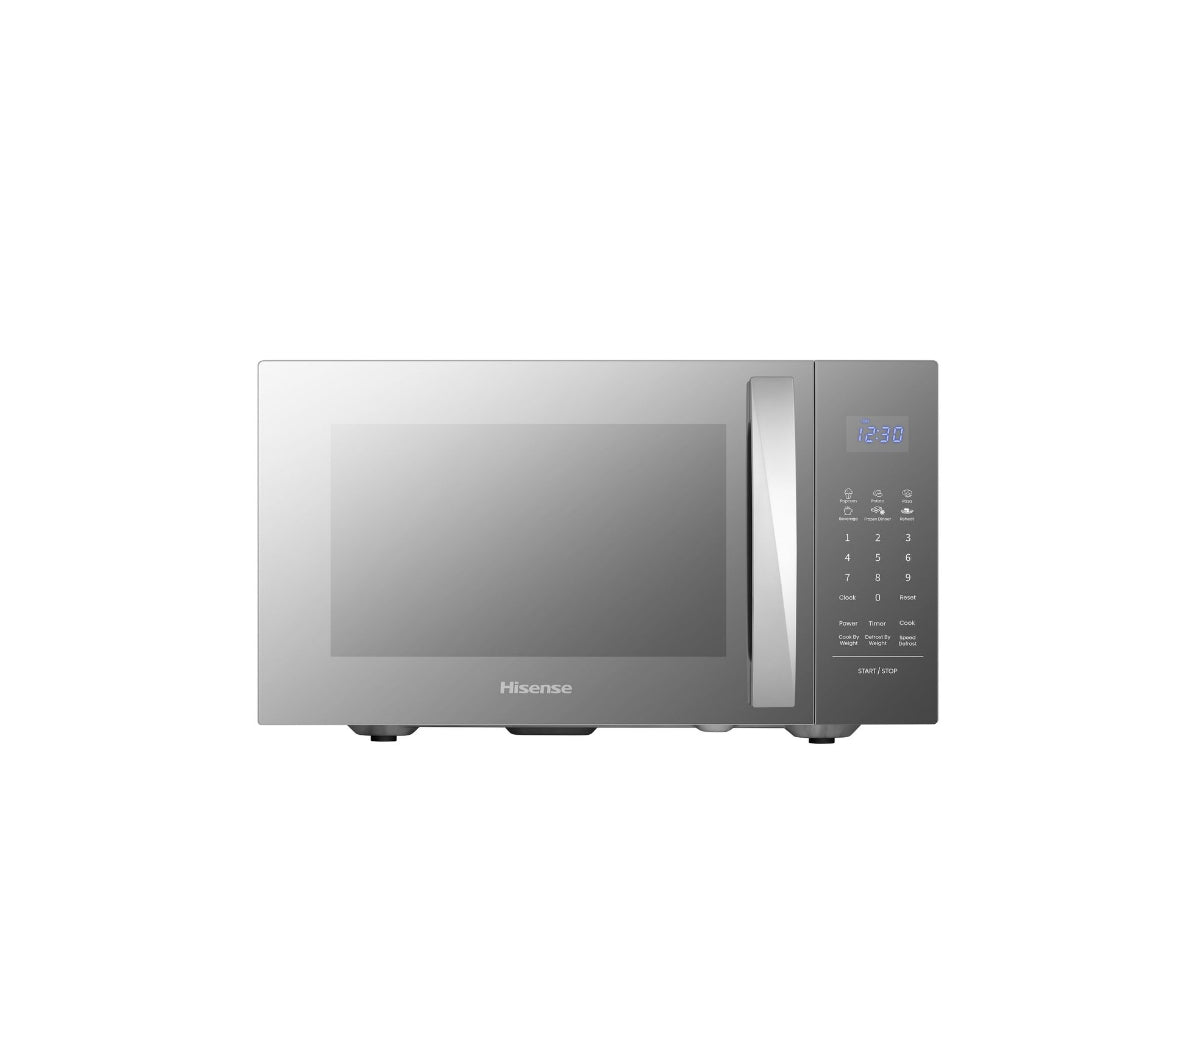 Hisense 26L Electronic Microwave Oven - Mirror